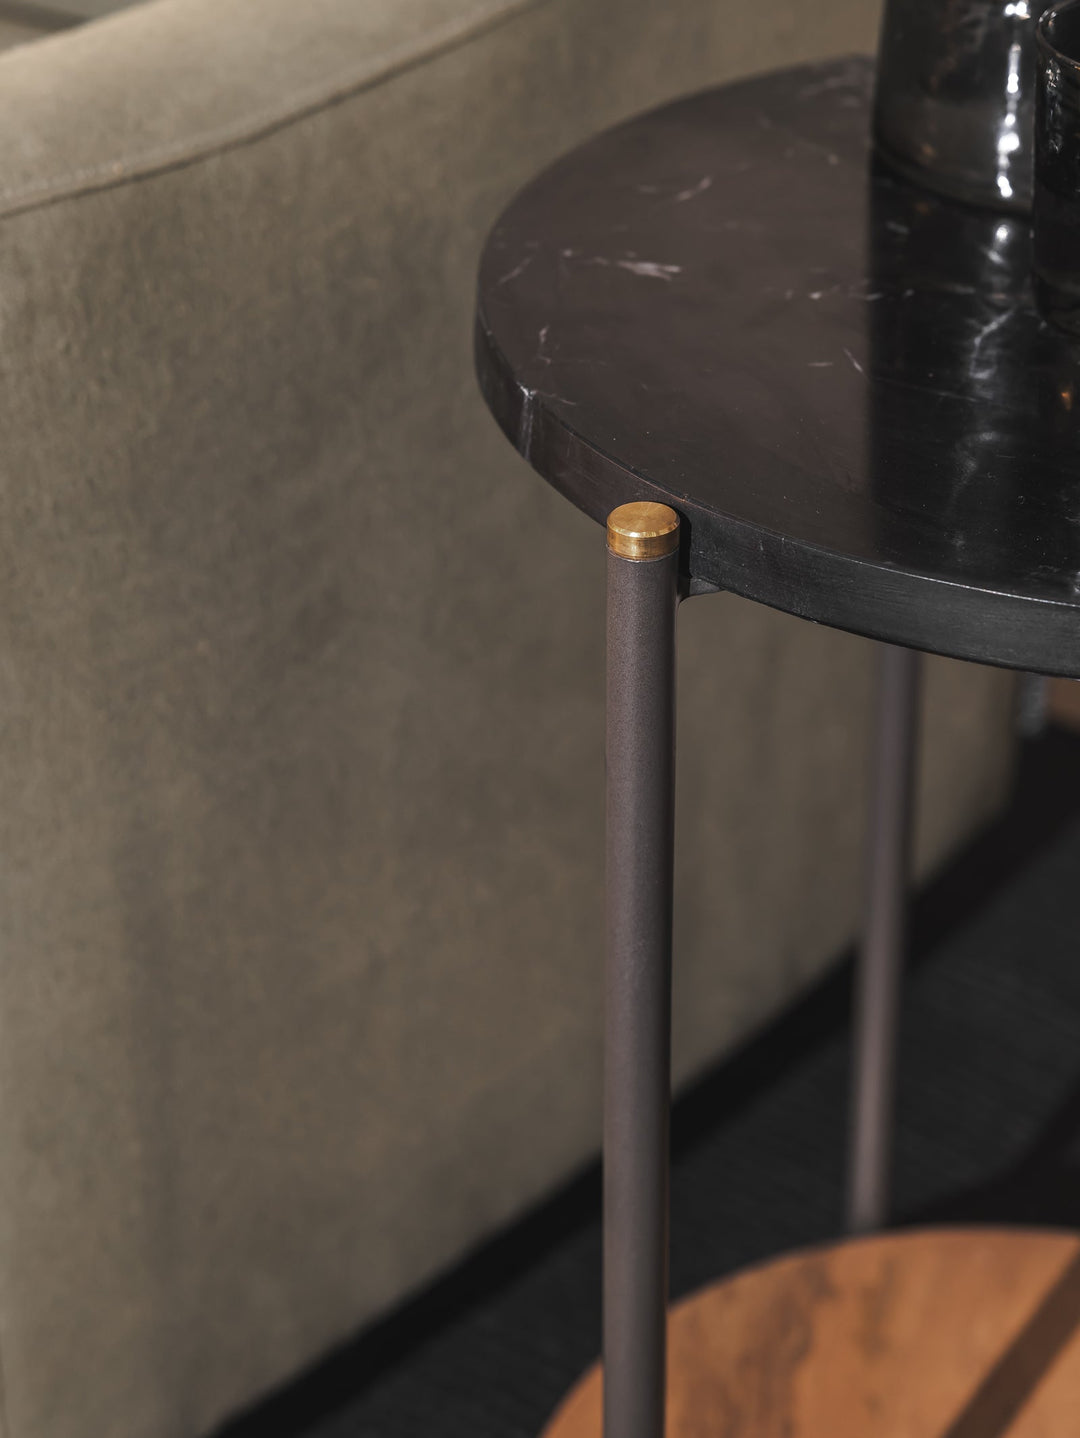 Serene Table - Table- Hertex Haus Online - Furniture